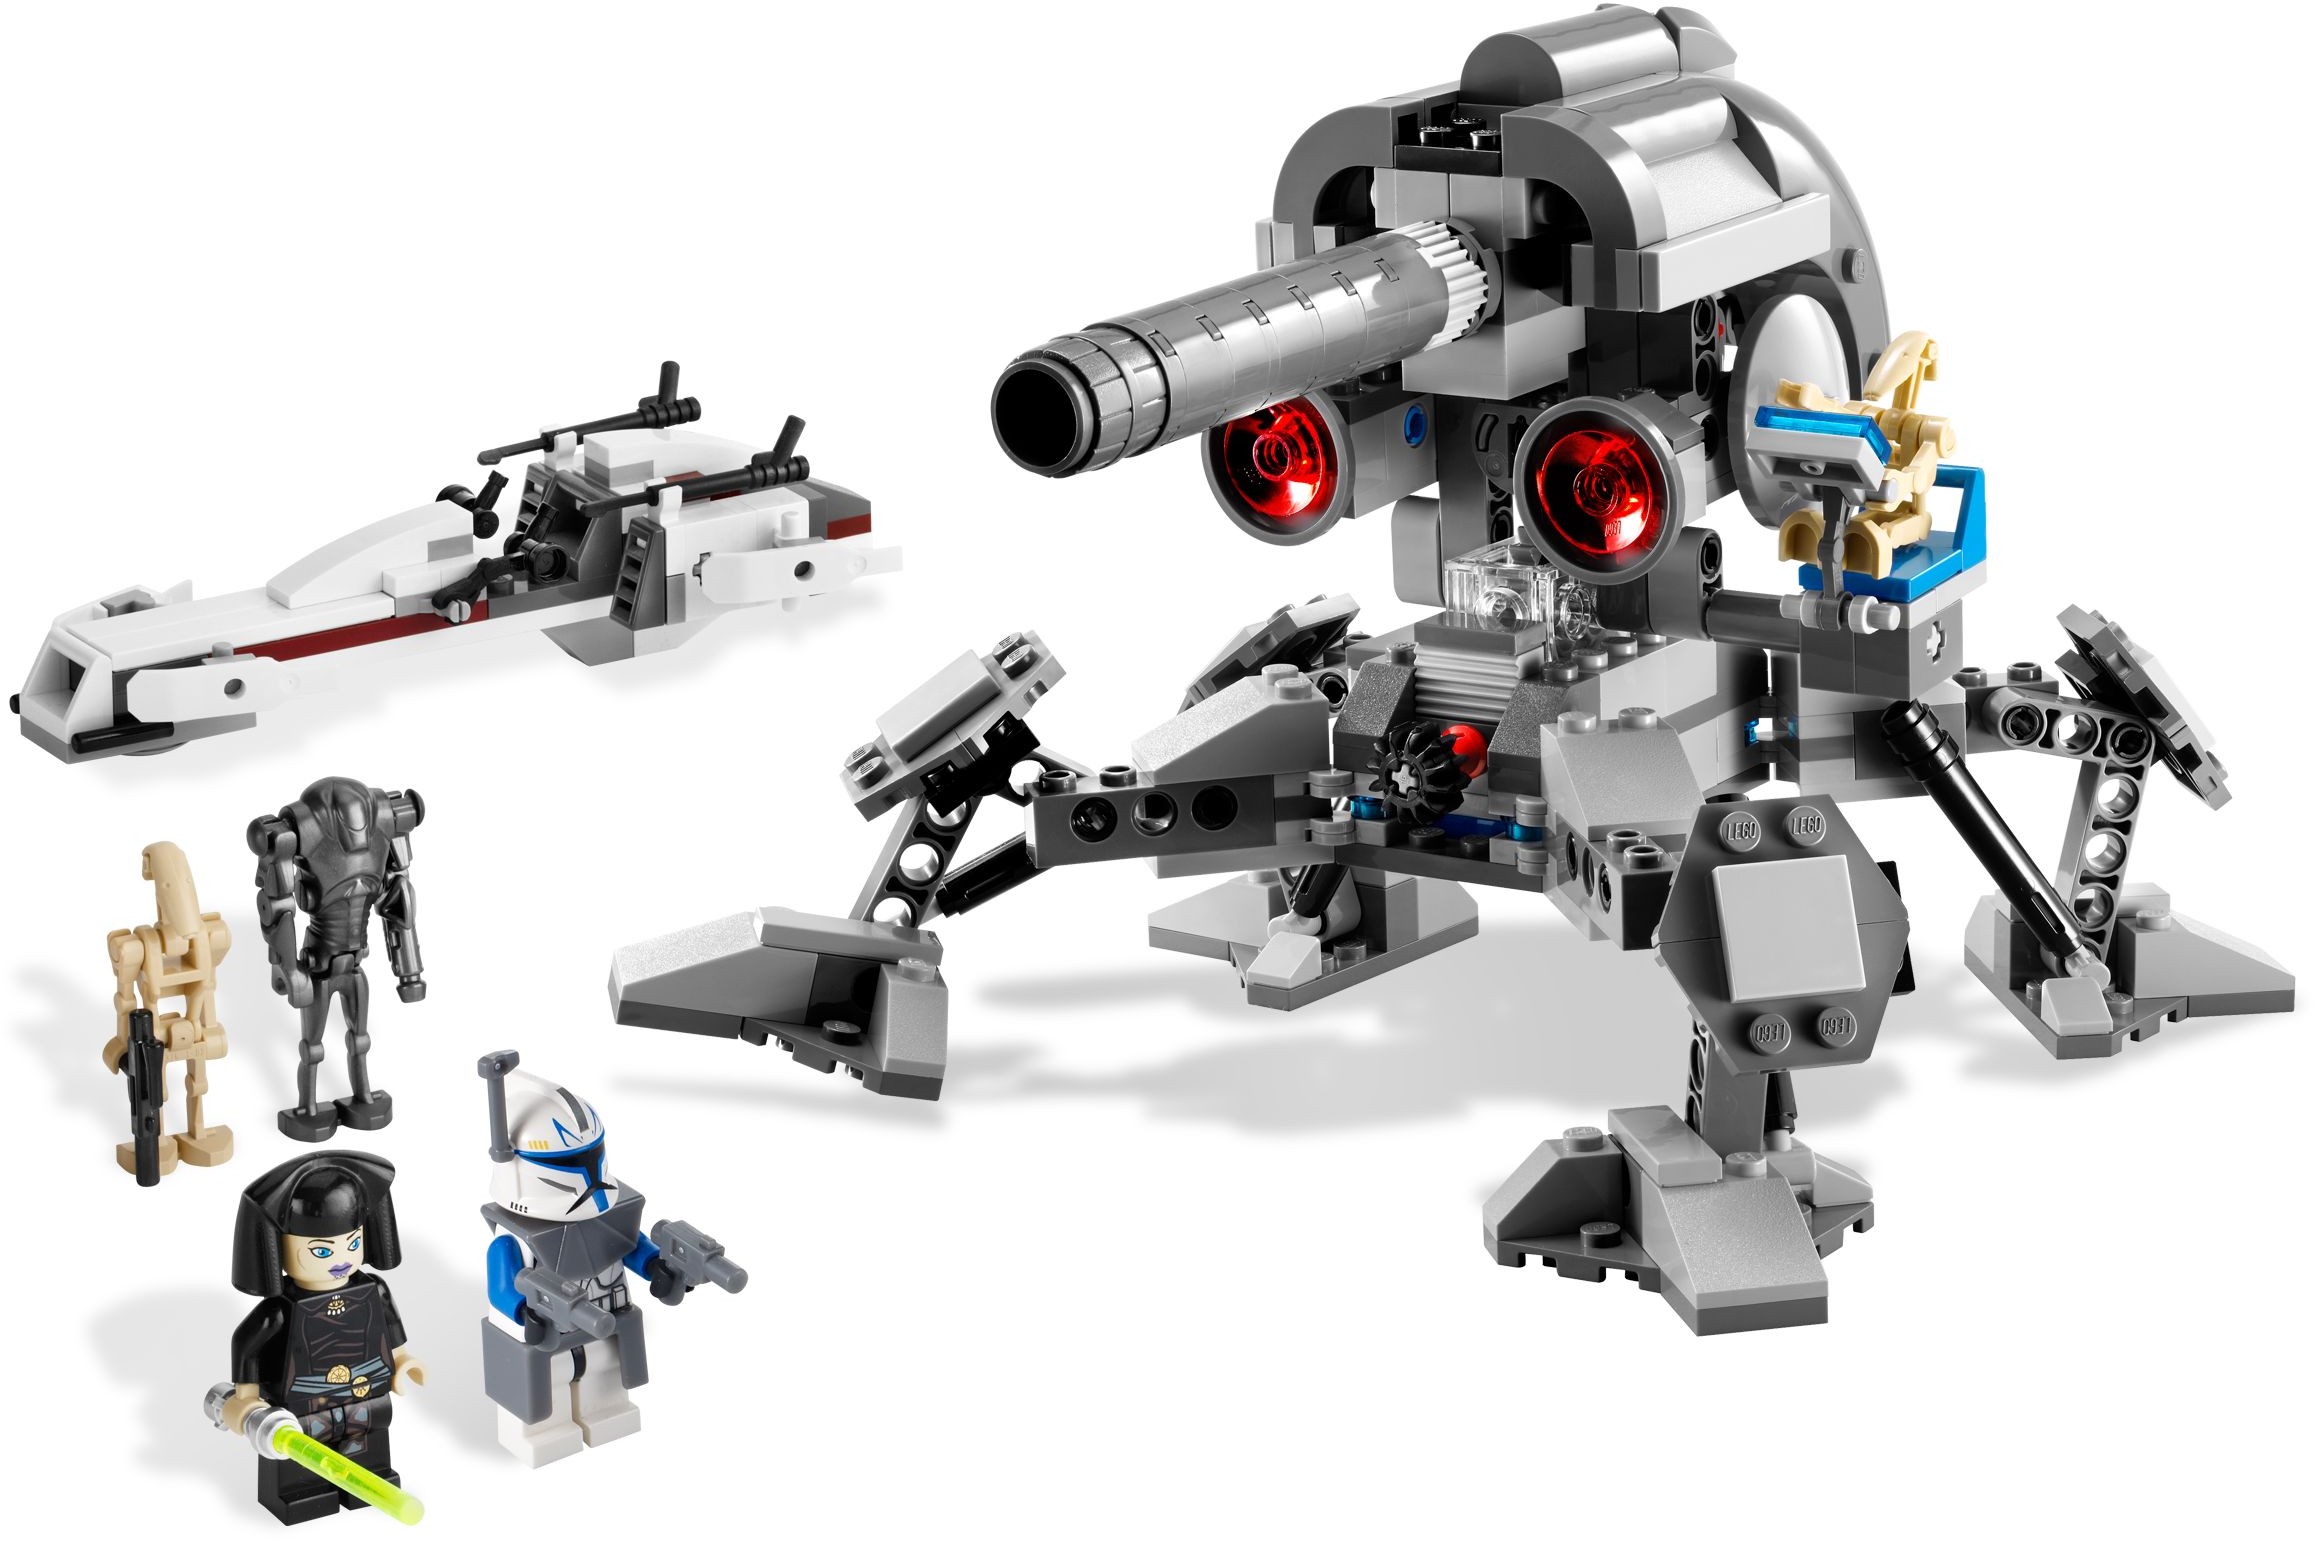 LEGO Star Wars Super Battle Droid with Blaster Arm Minifigure 7869 sw0230 